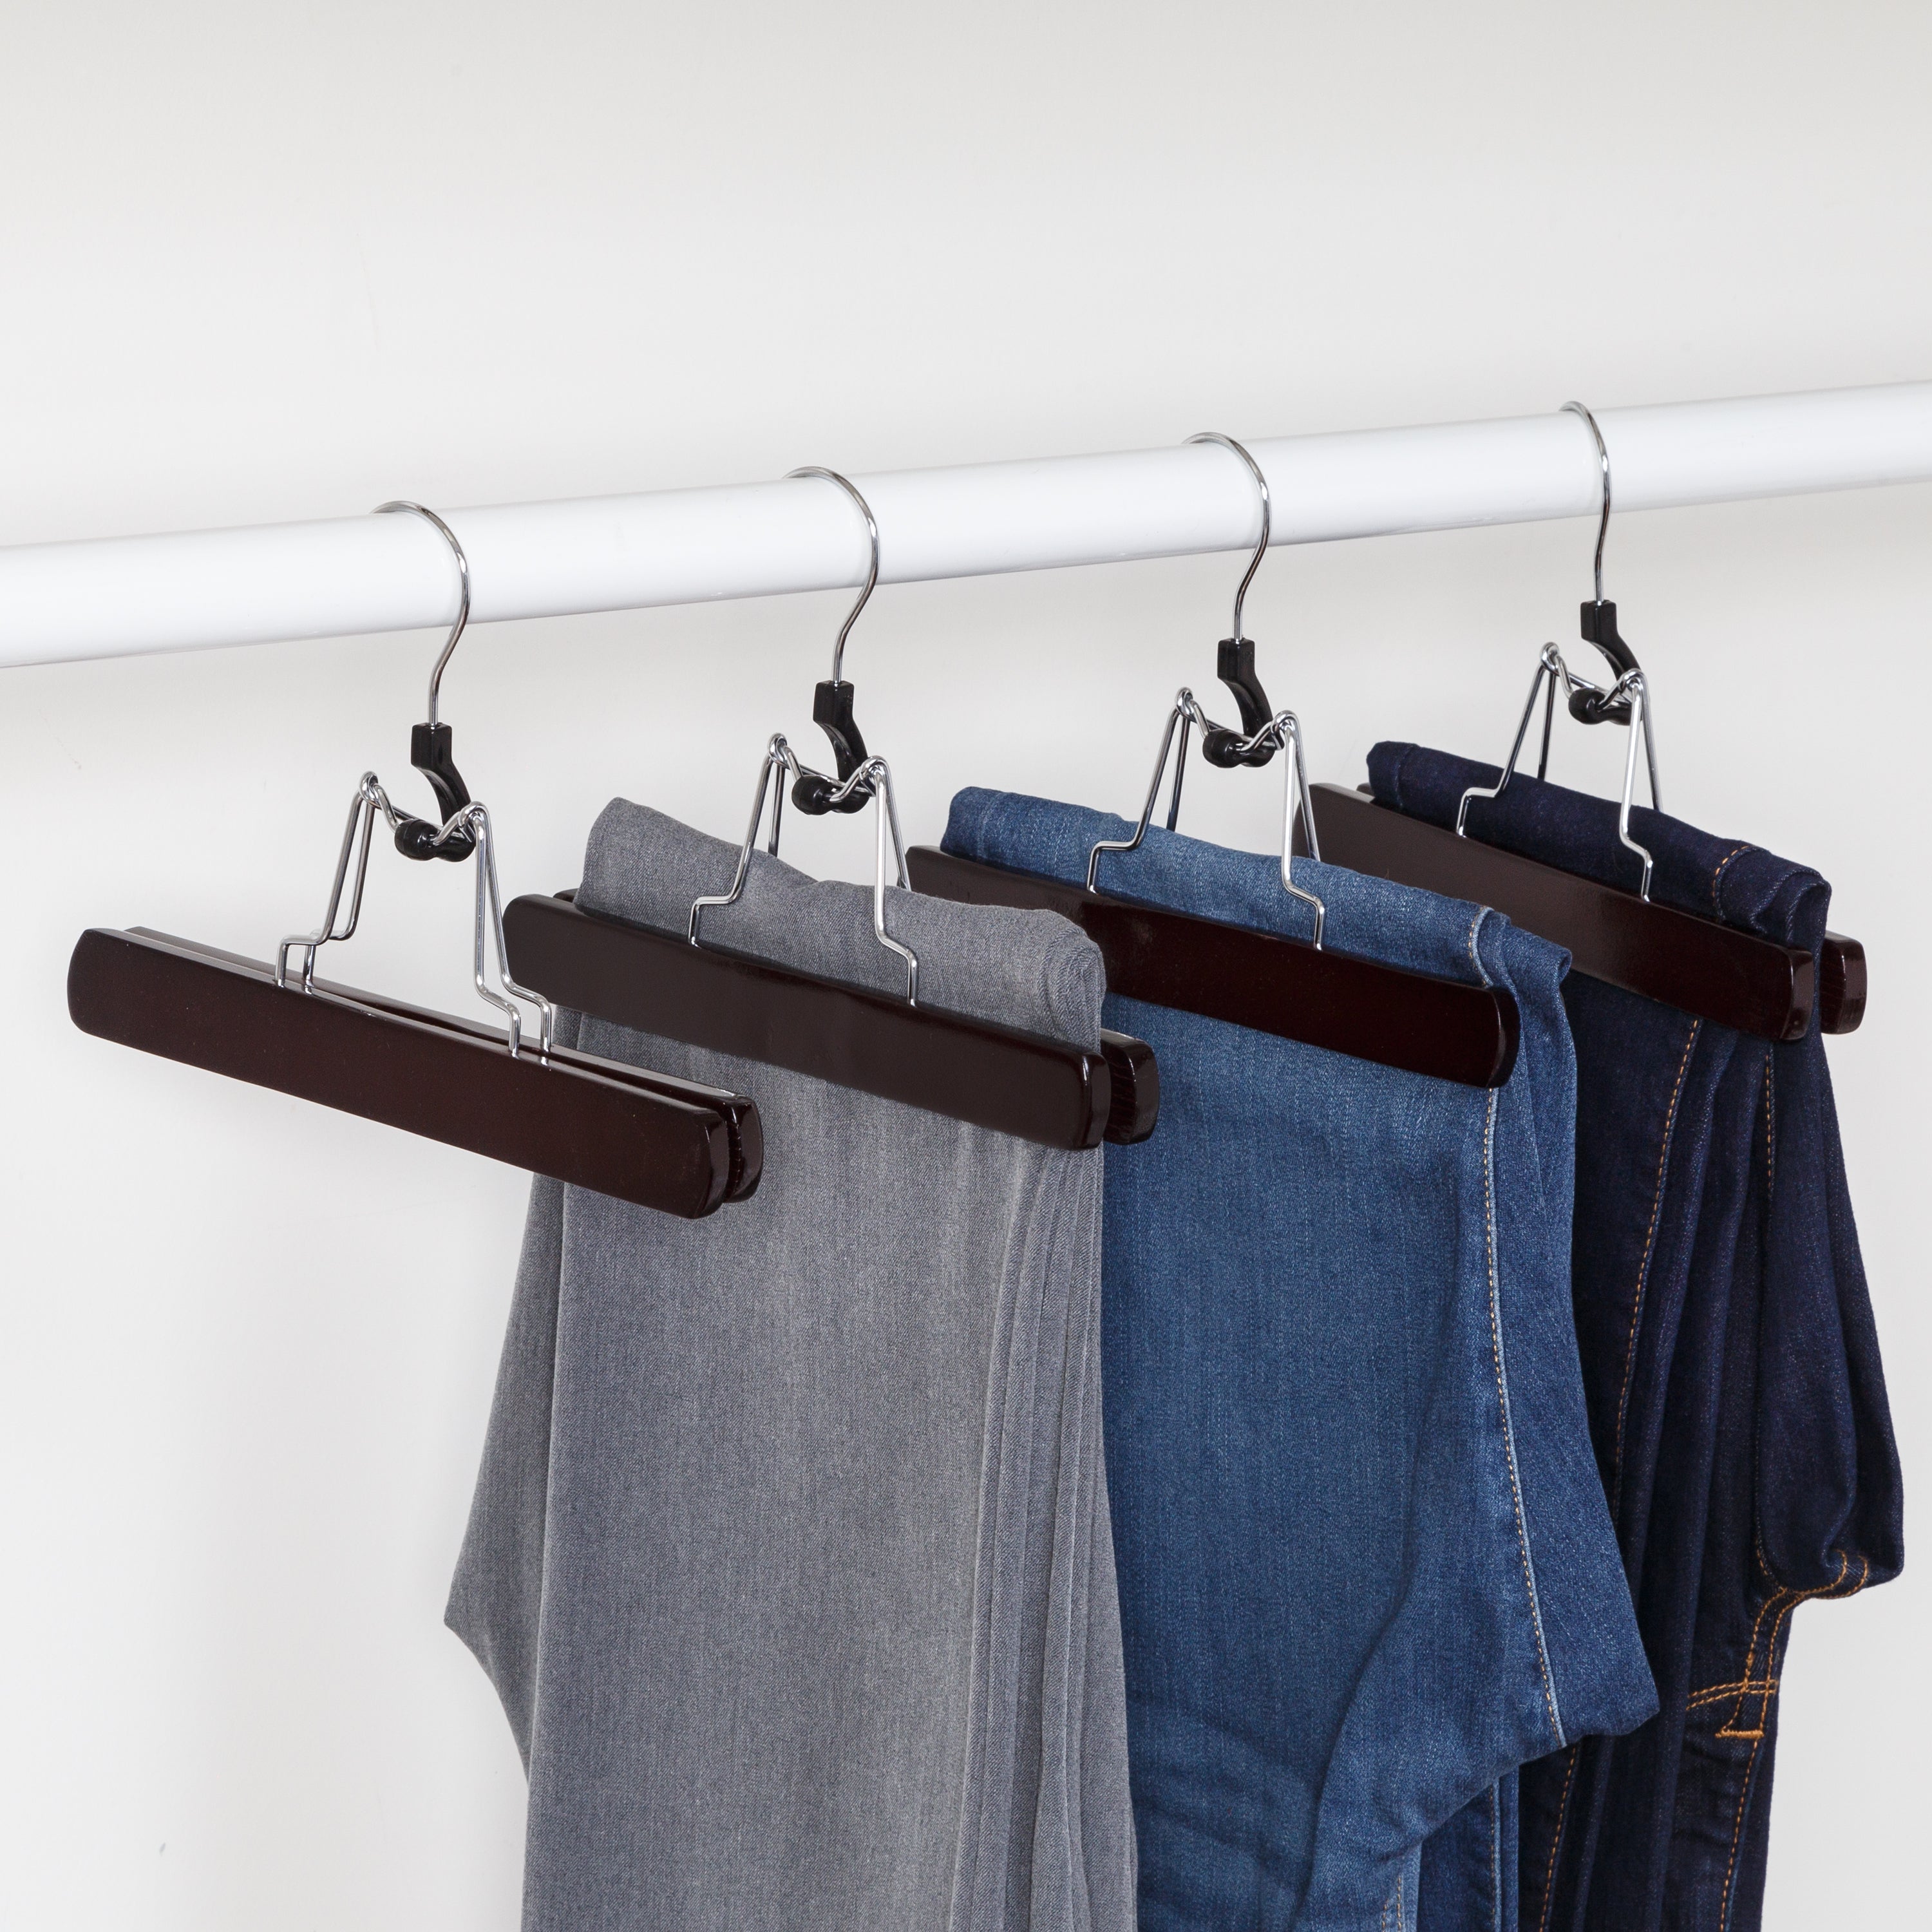 Laundry & Home Care - Home Essentials Multi Belt Hanger